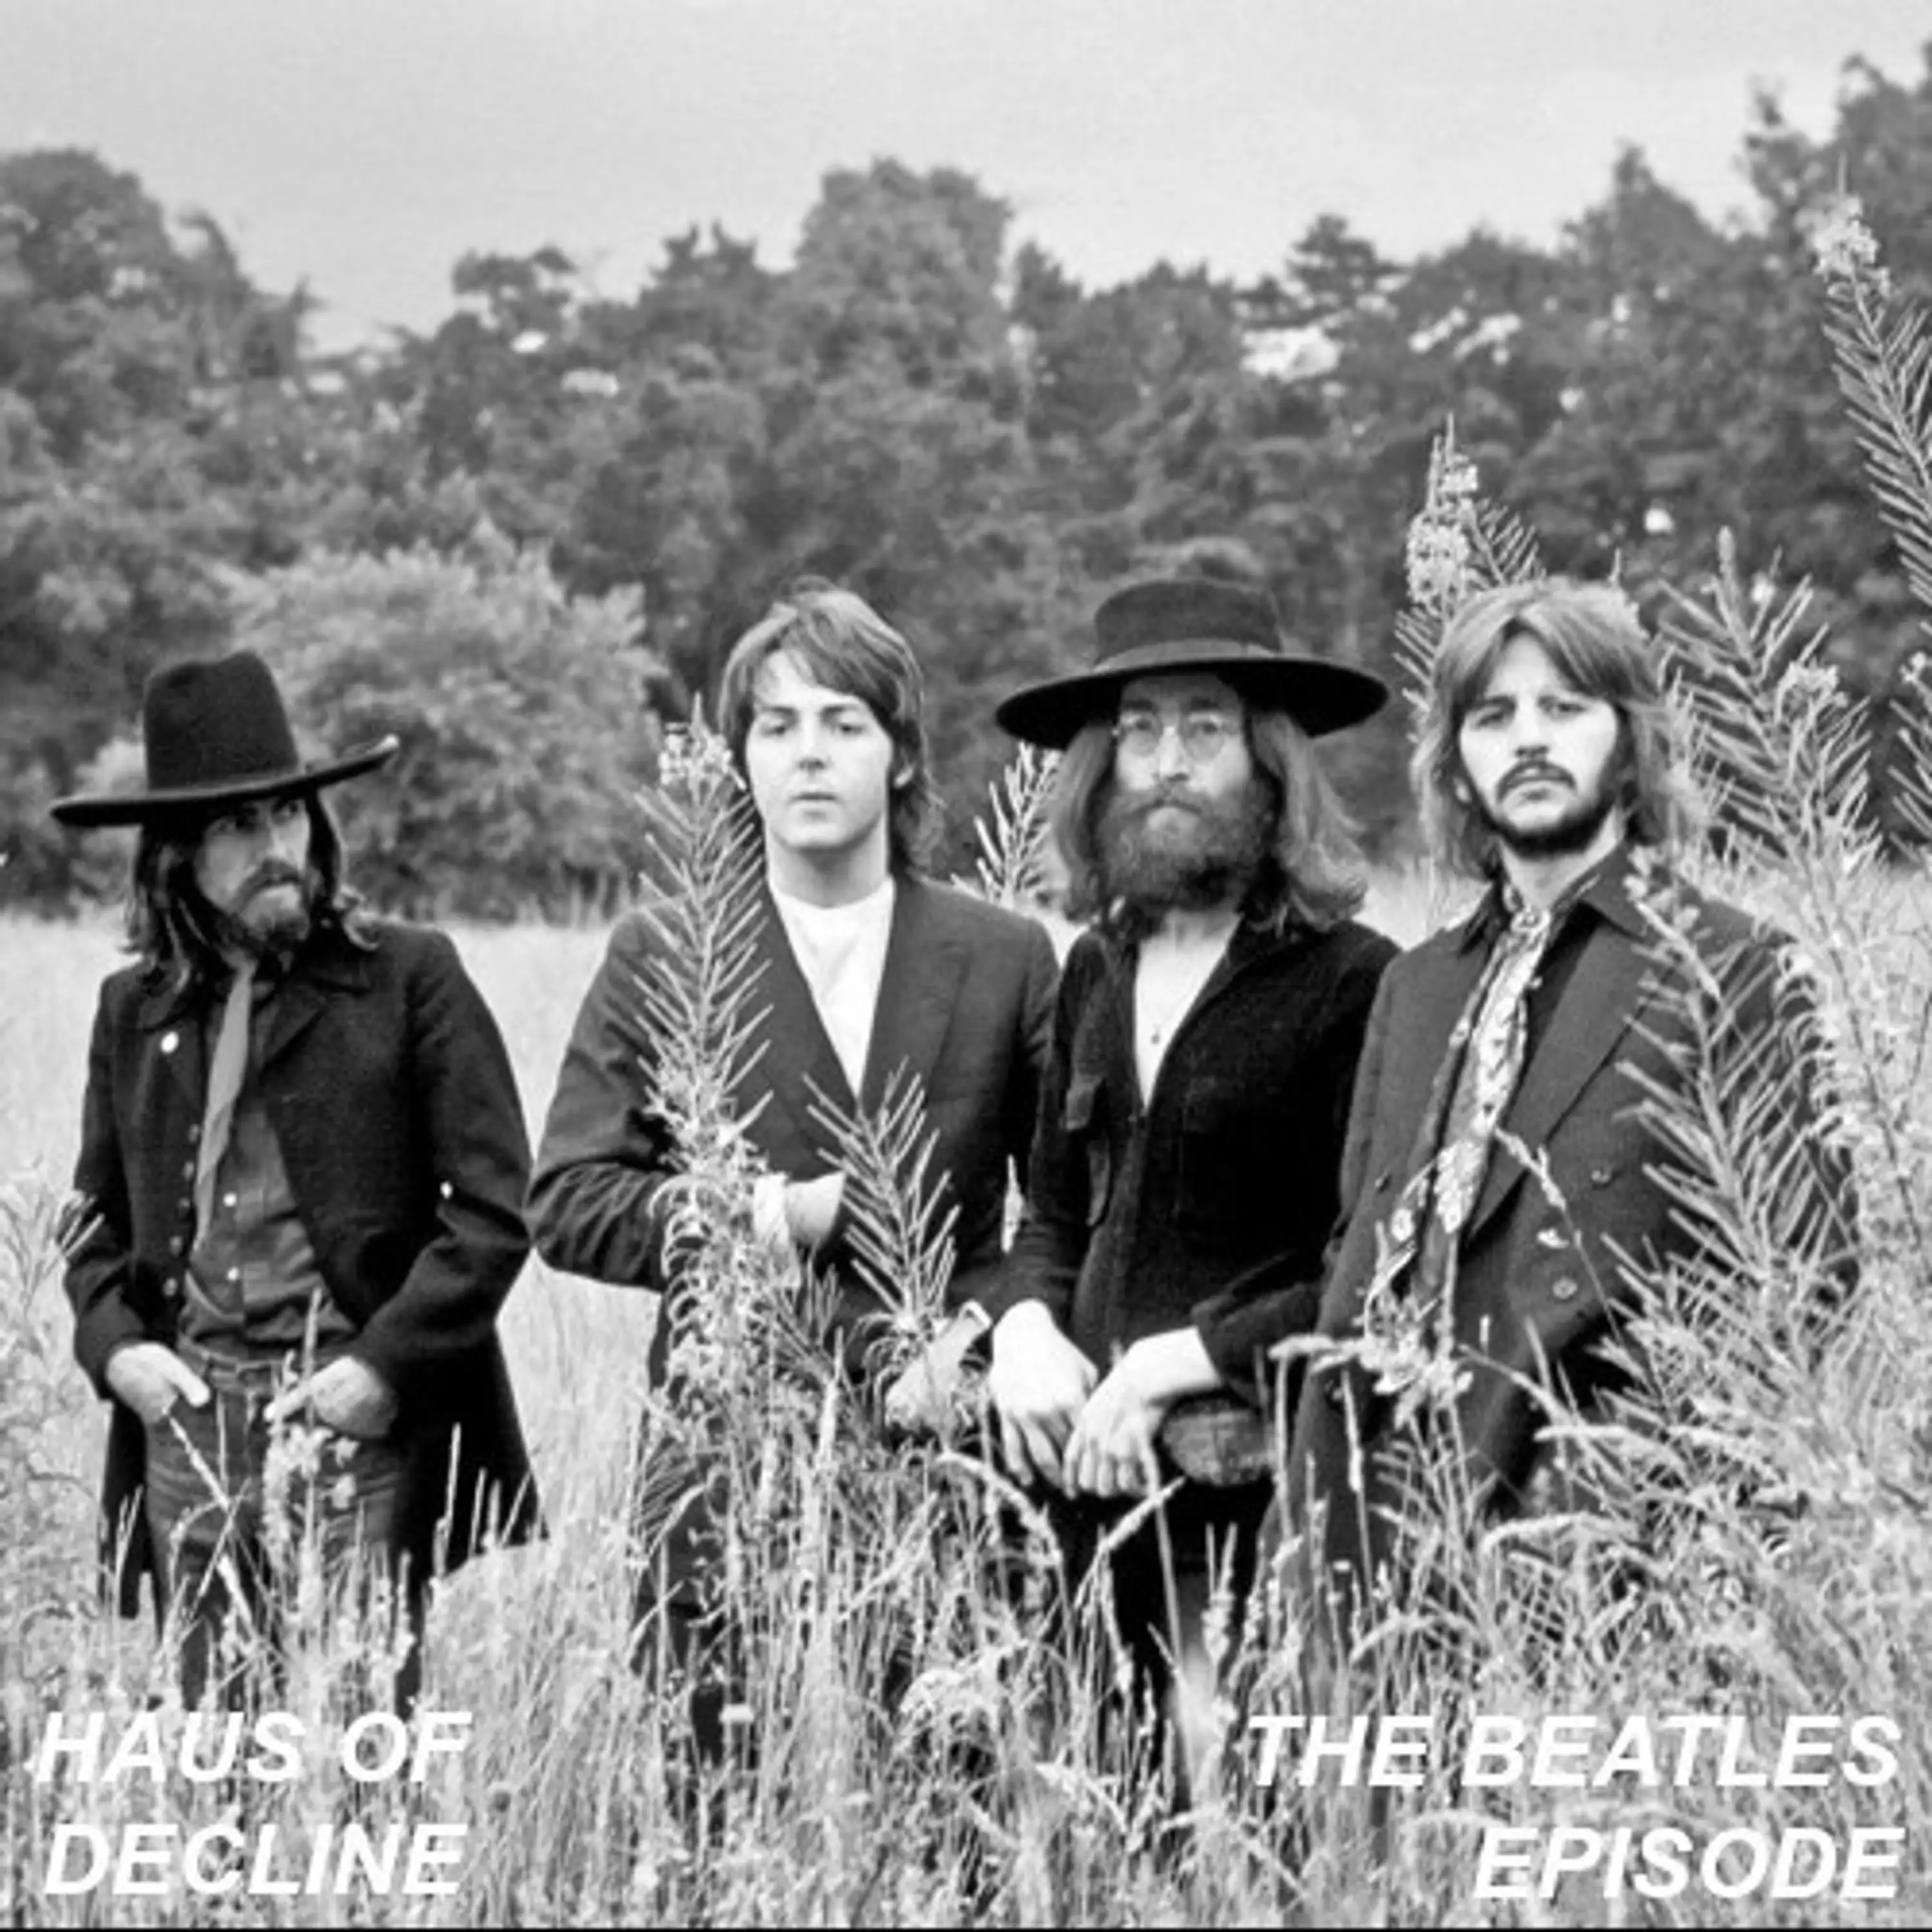 The Beatles Episode